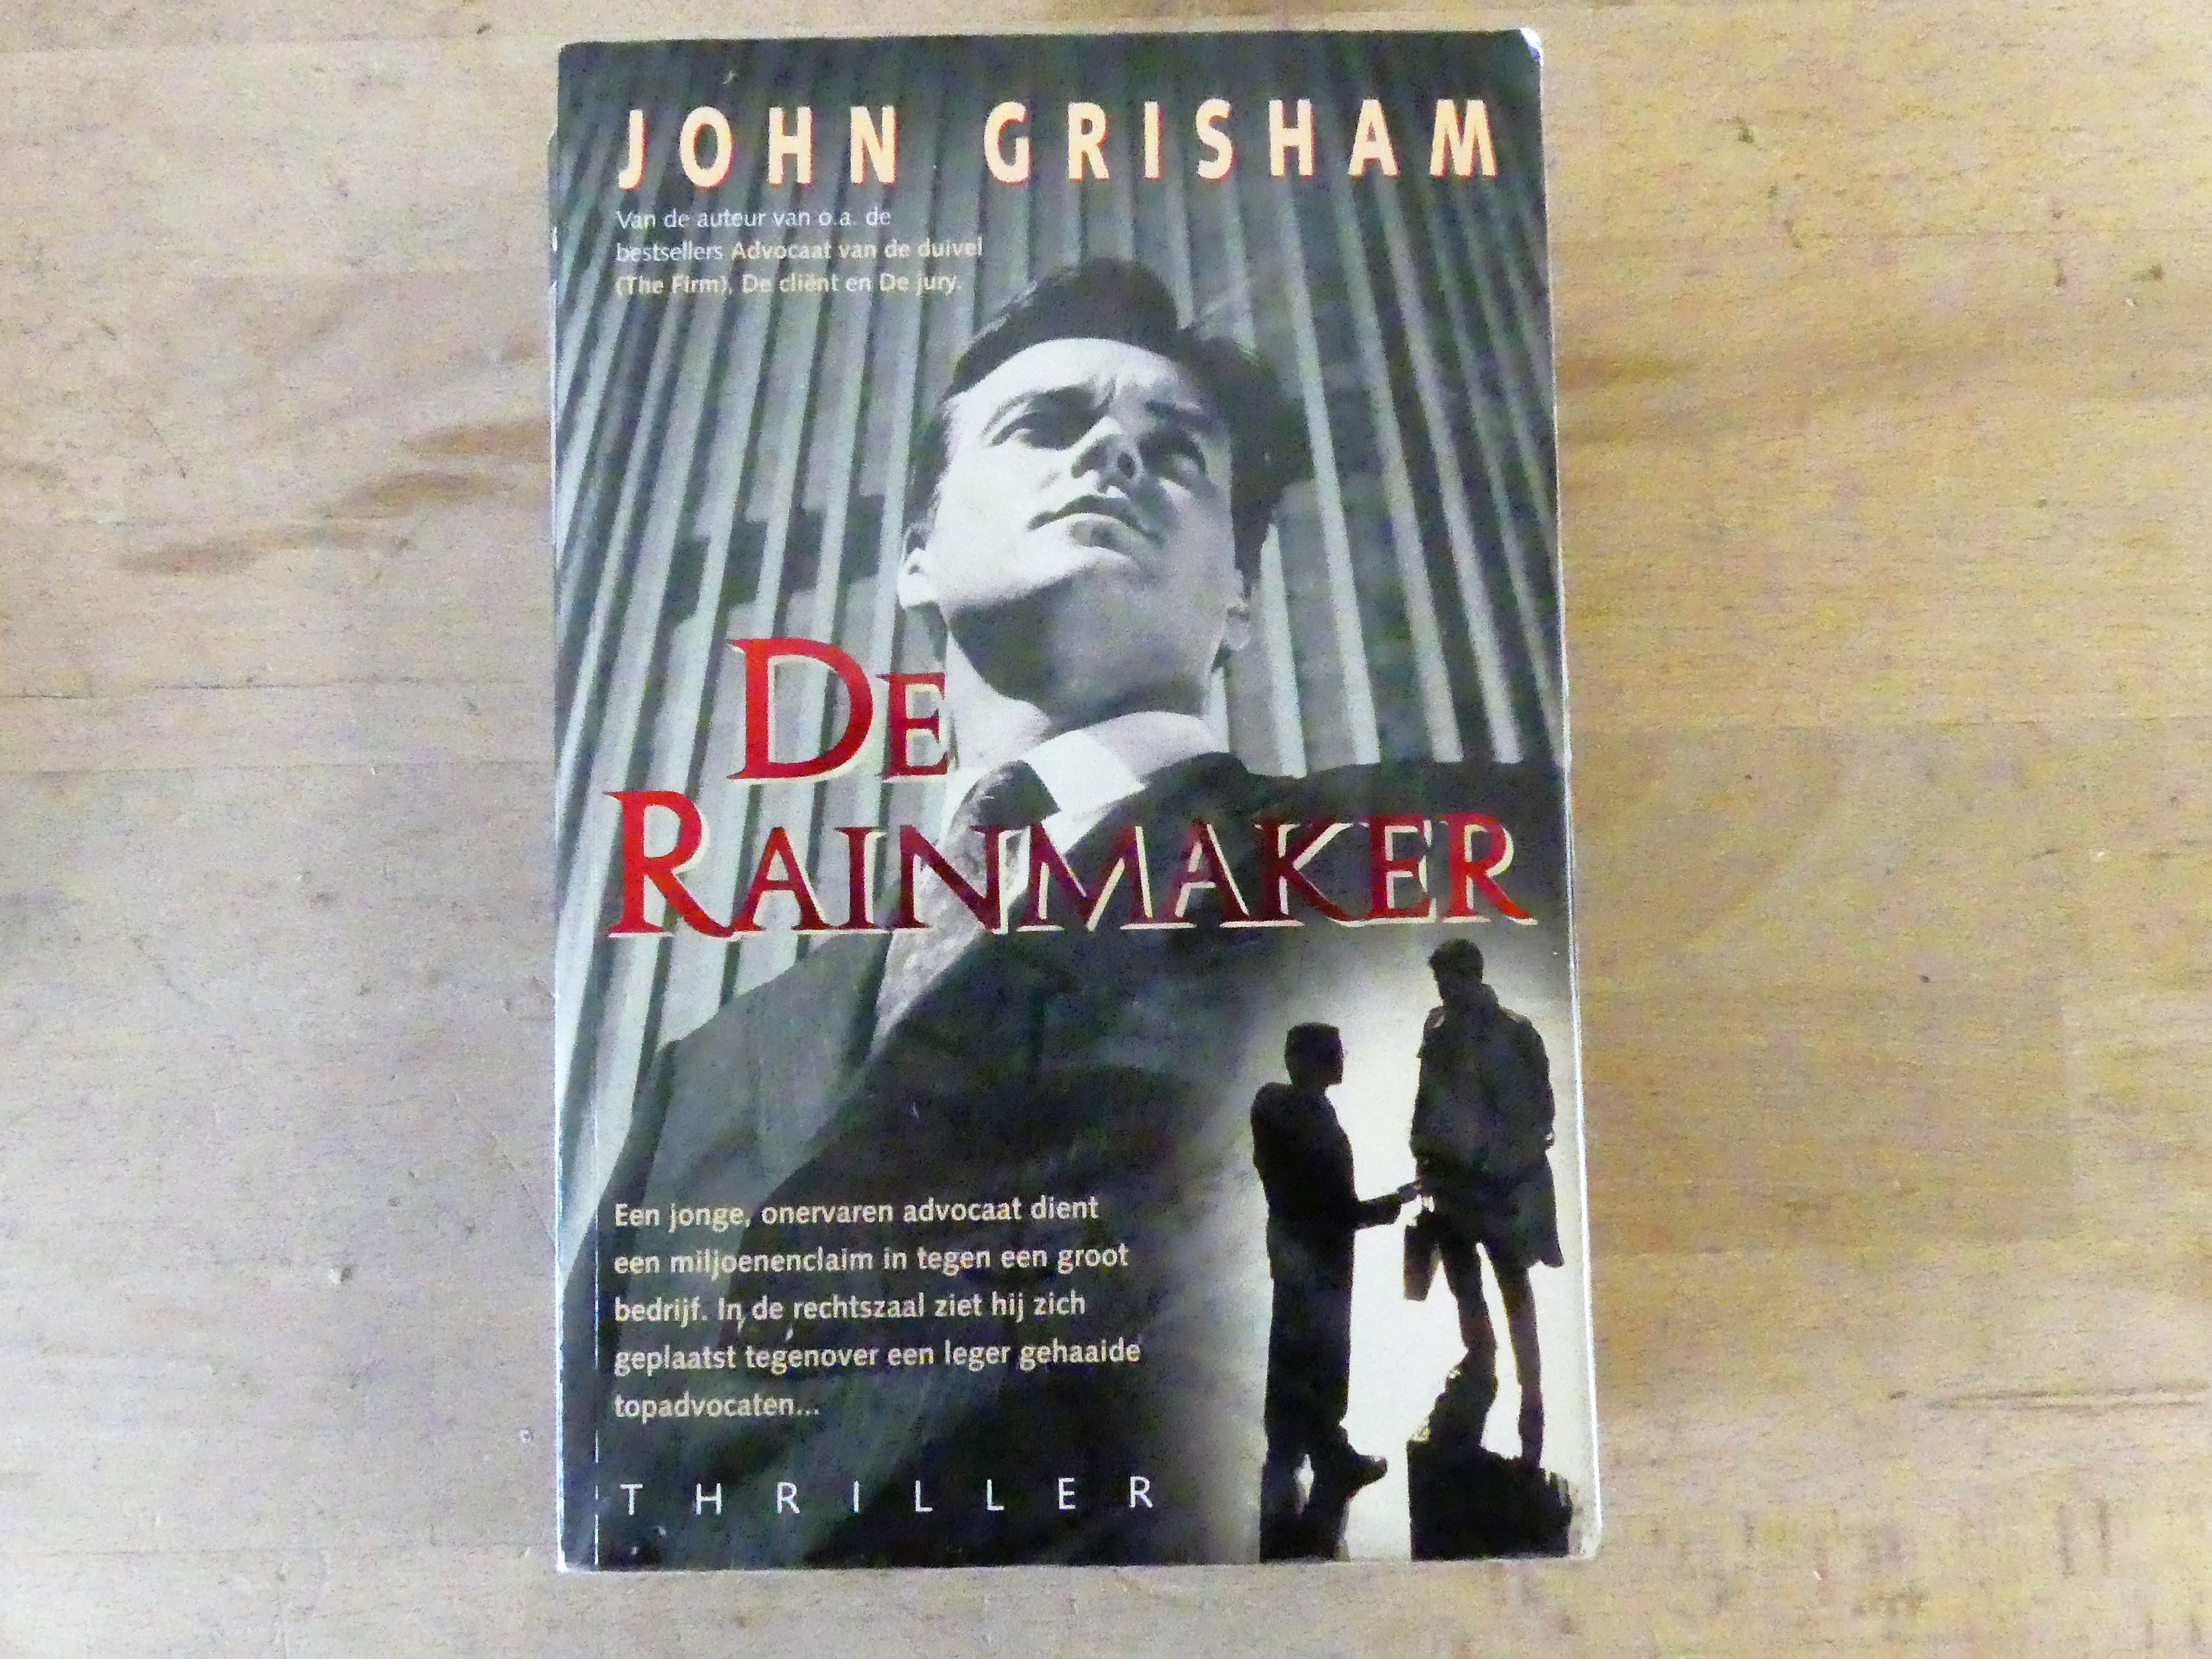 John Grisham "De Rainmaker" 